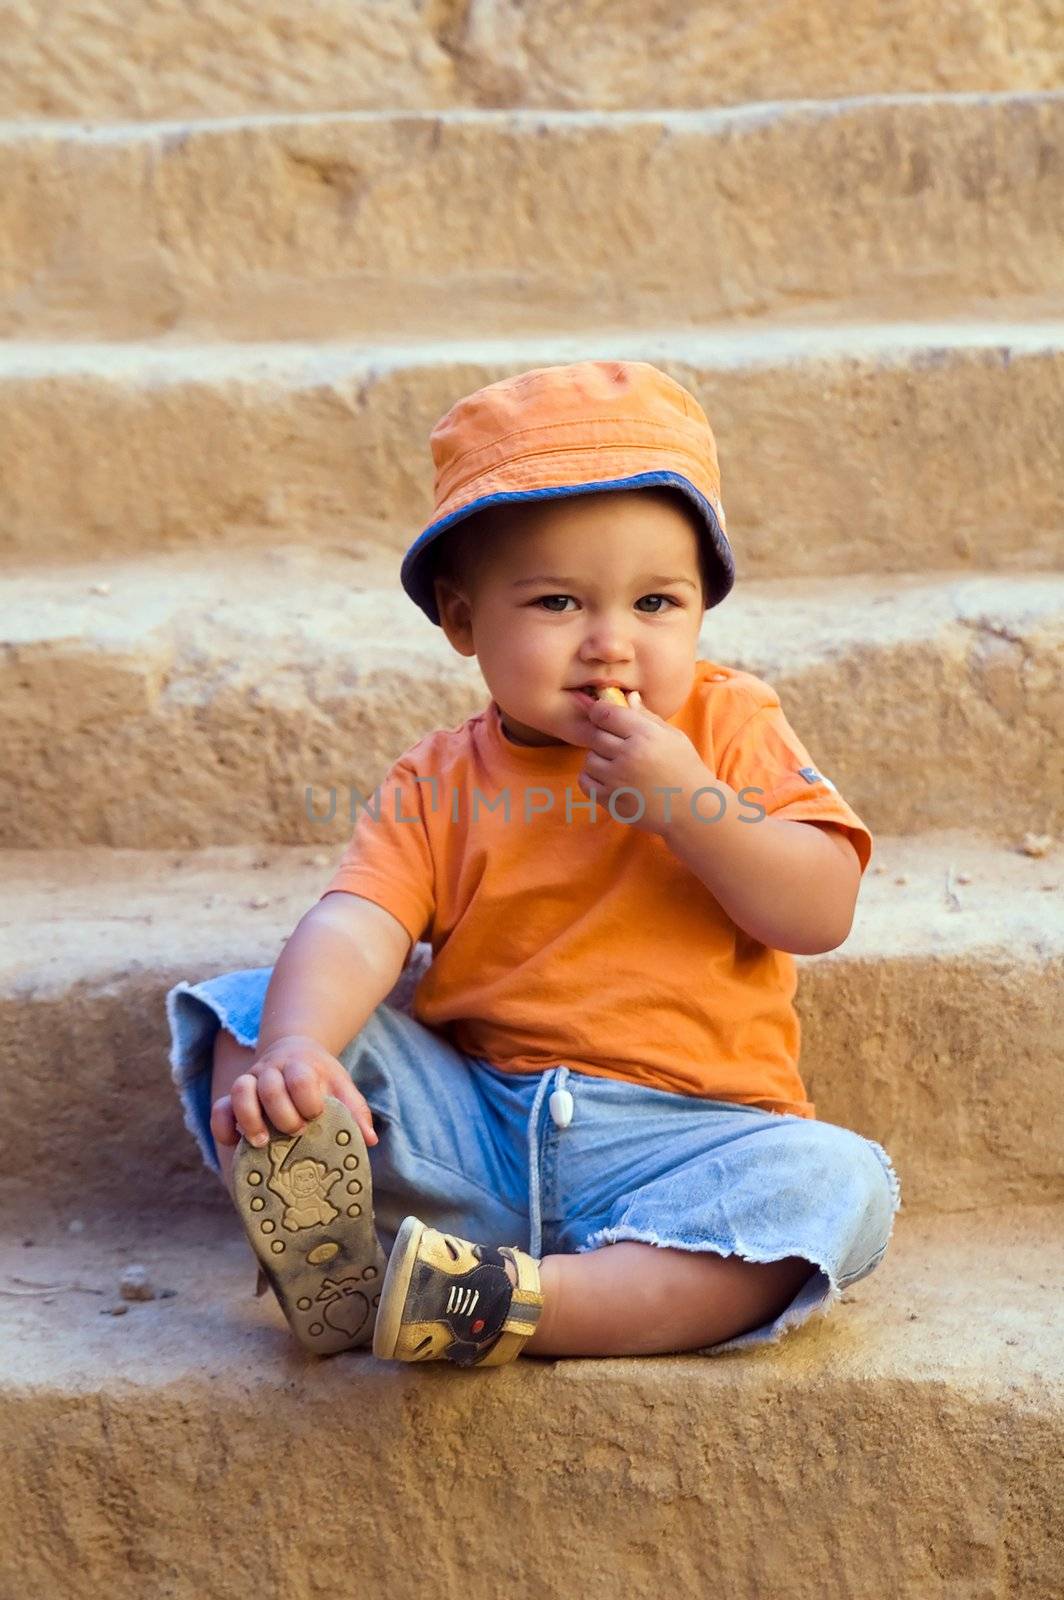 Orange dressed boy sitting on steps and eating